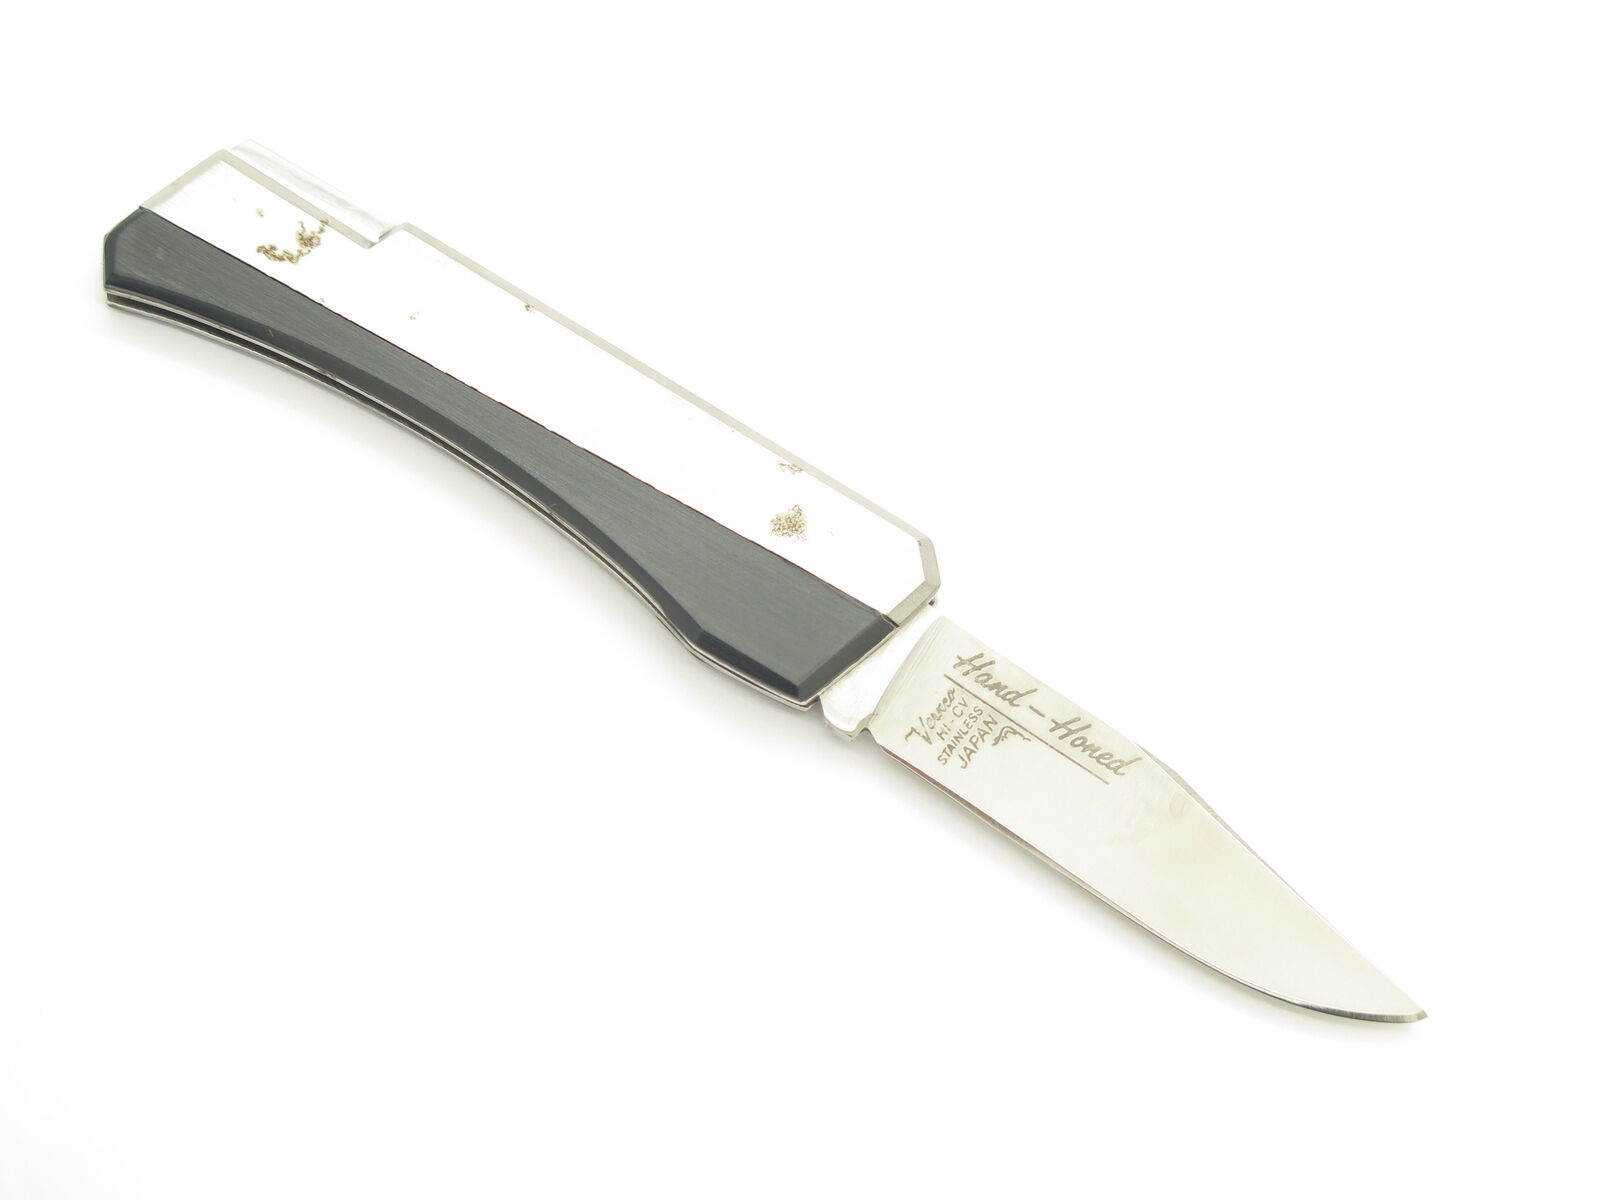 Vtg 1970s Vernco HiCV Black Angus Seki Japan Small Folding Lockback Pocket Knife